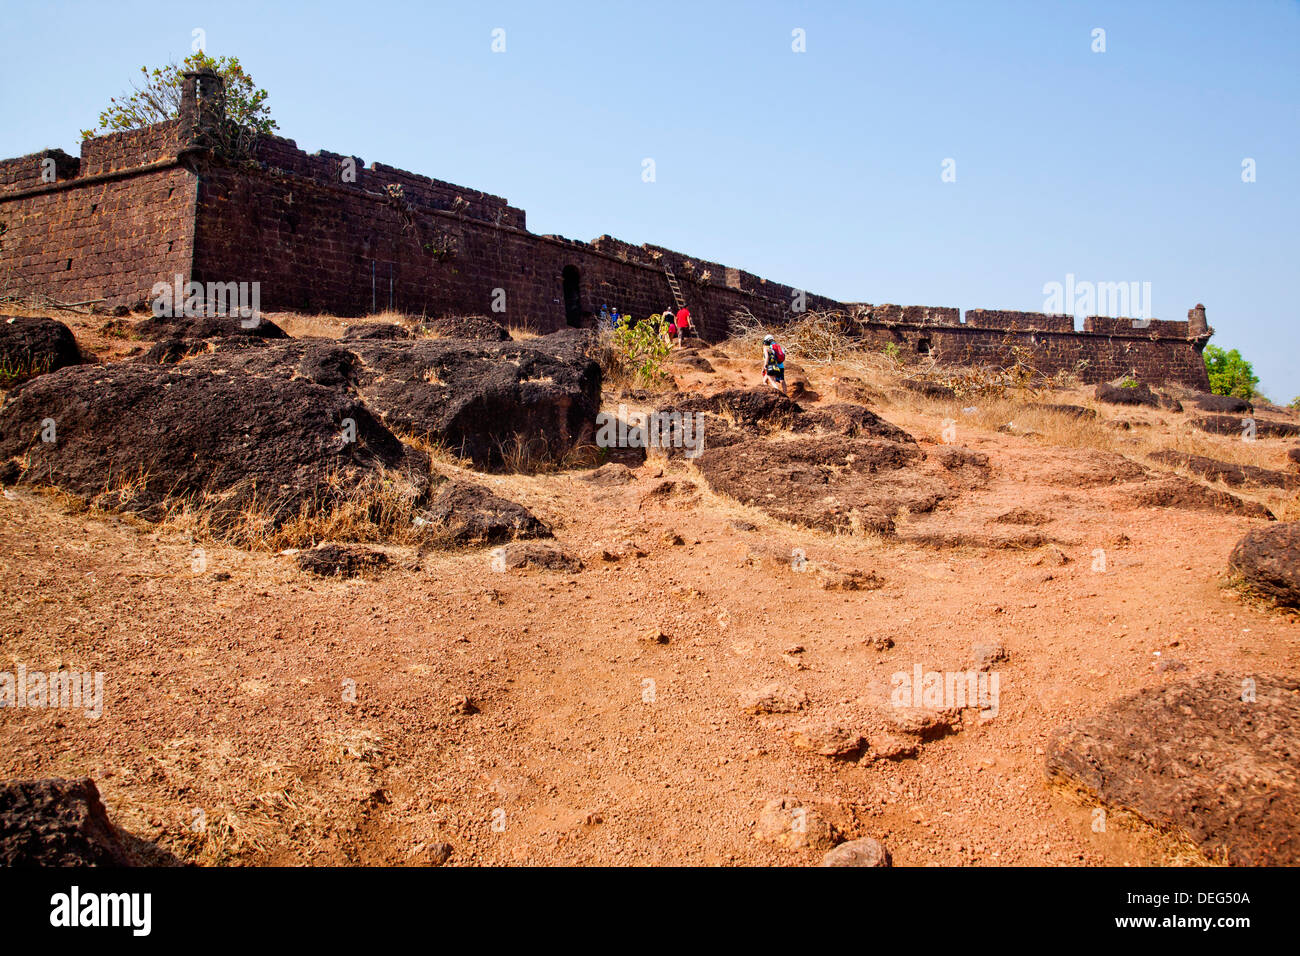 Ruins of the Chapora Fort, Vagator Beach, Vagator, Bardez, North Goa, Goa, India Stock Photo